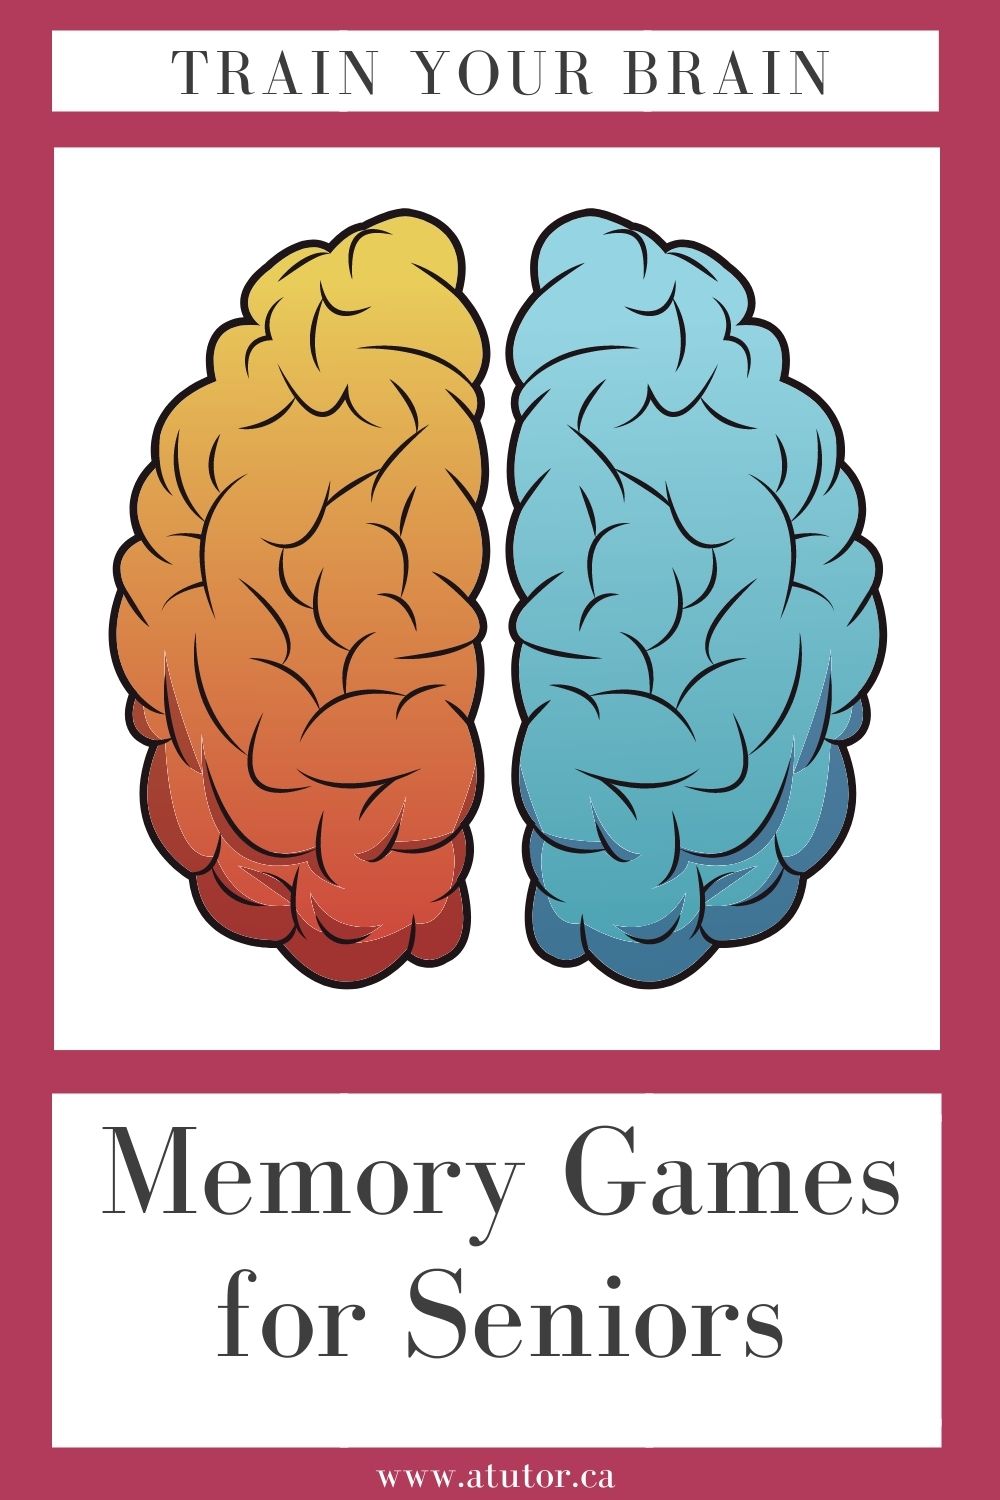 Train Your Brain Best Memory Games For Seniors A Tutor